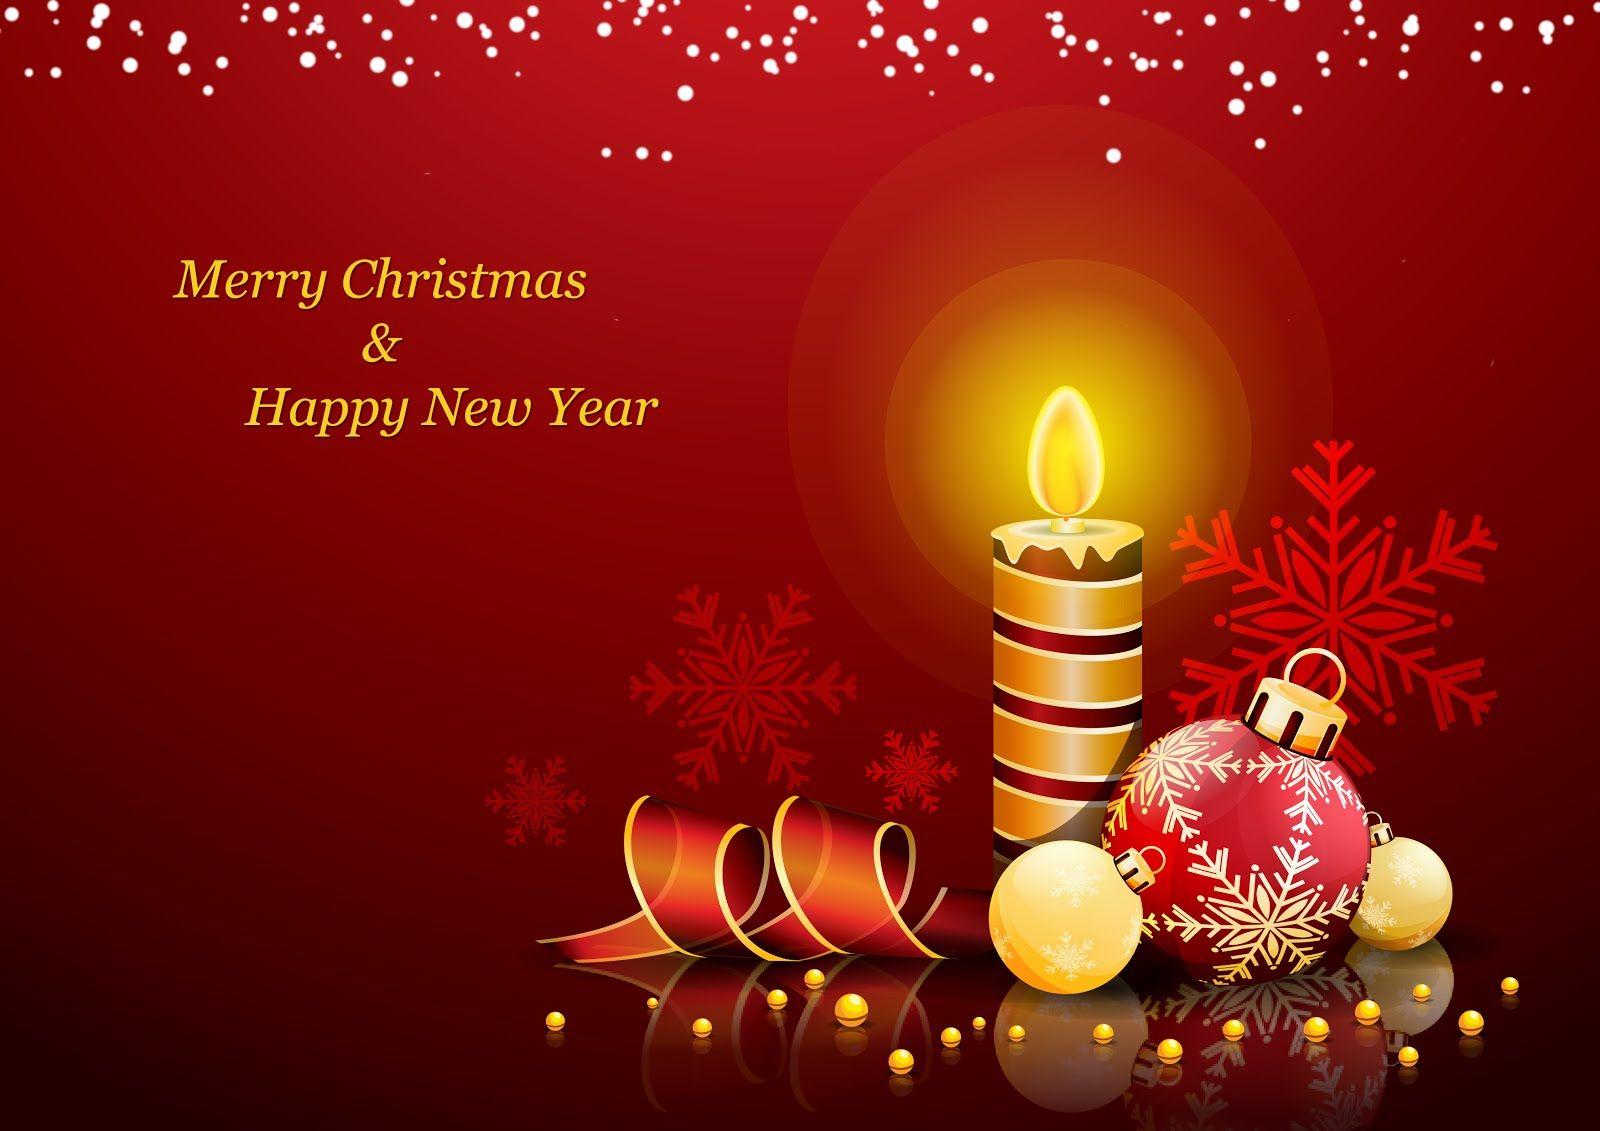 Merry Christmas 2013 Celebrate the Biggest Christian Festival